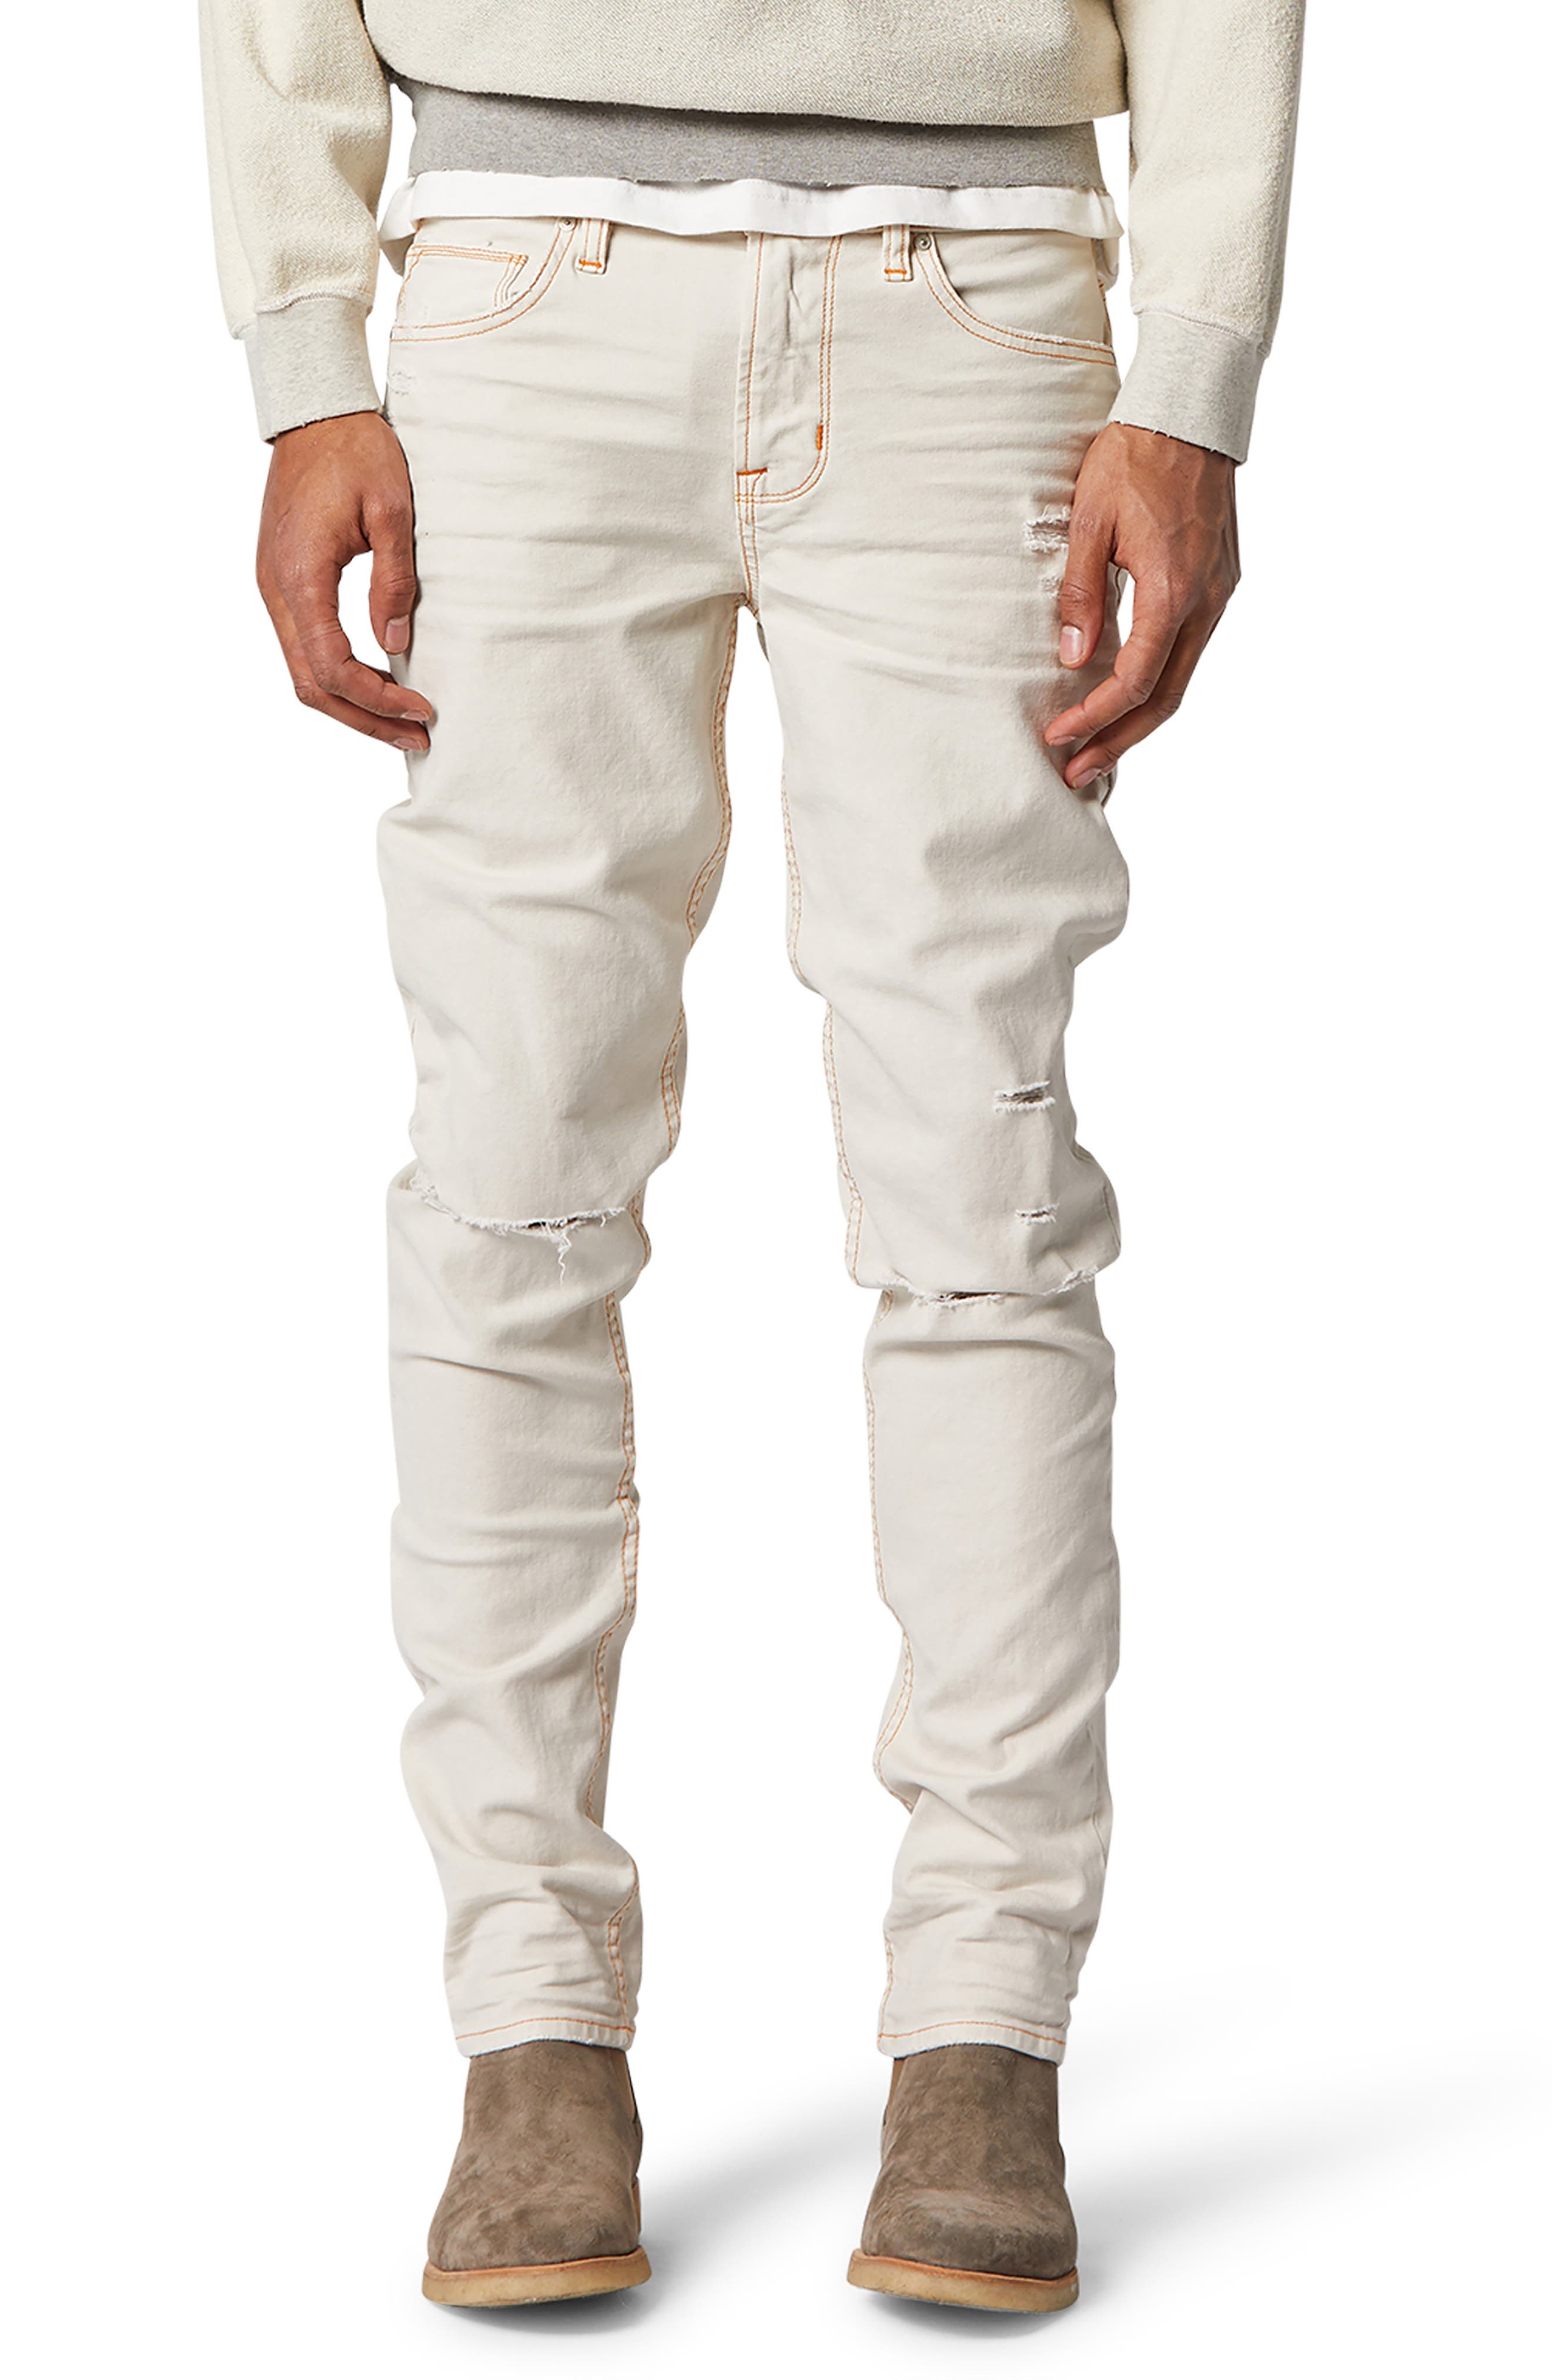 white jeans price